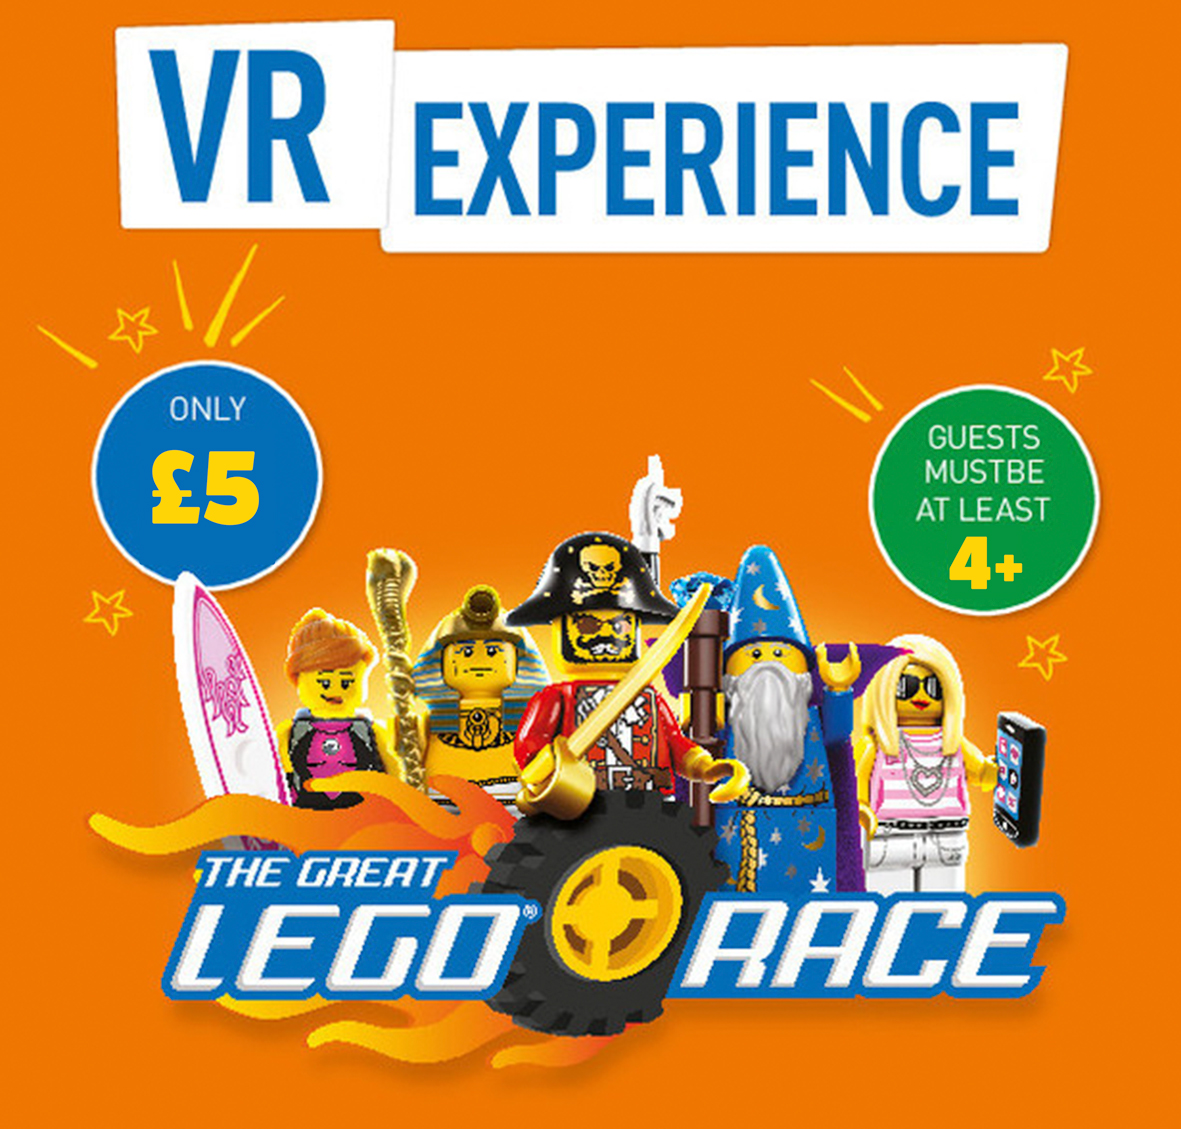 Great VR Race